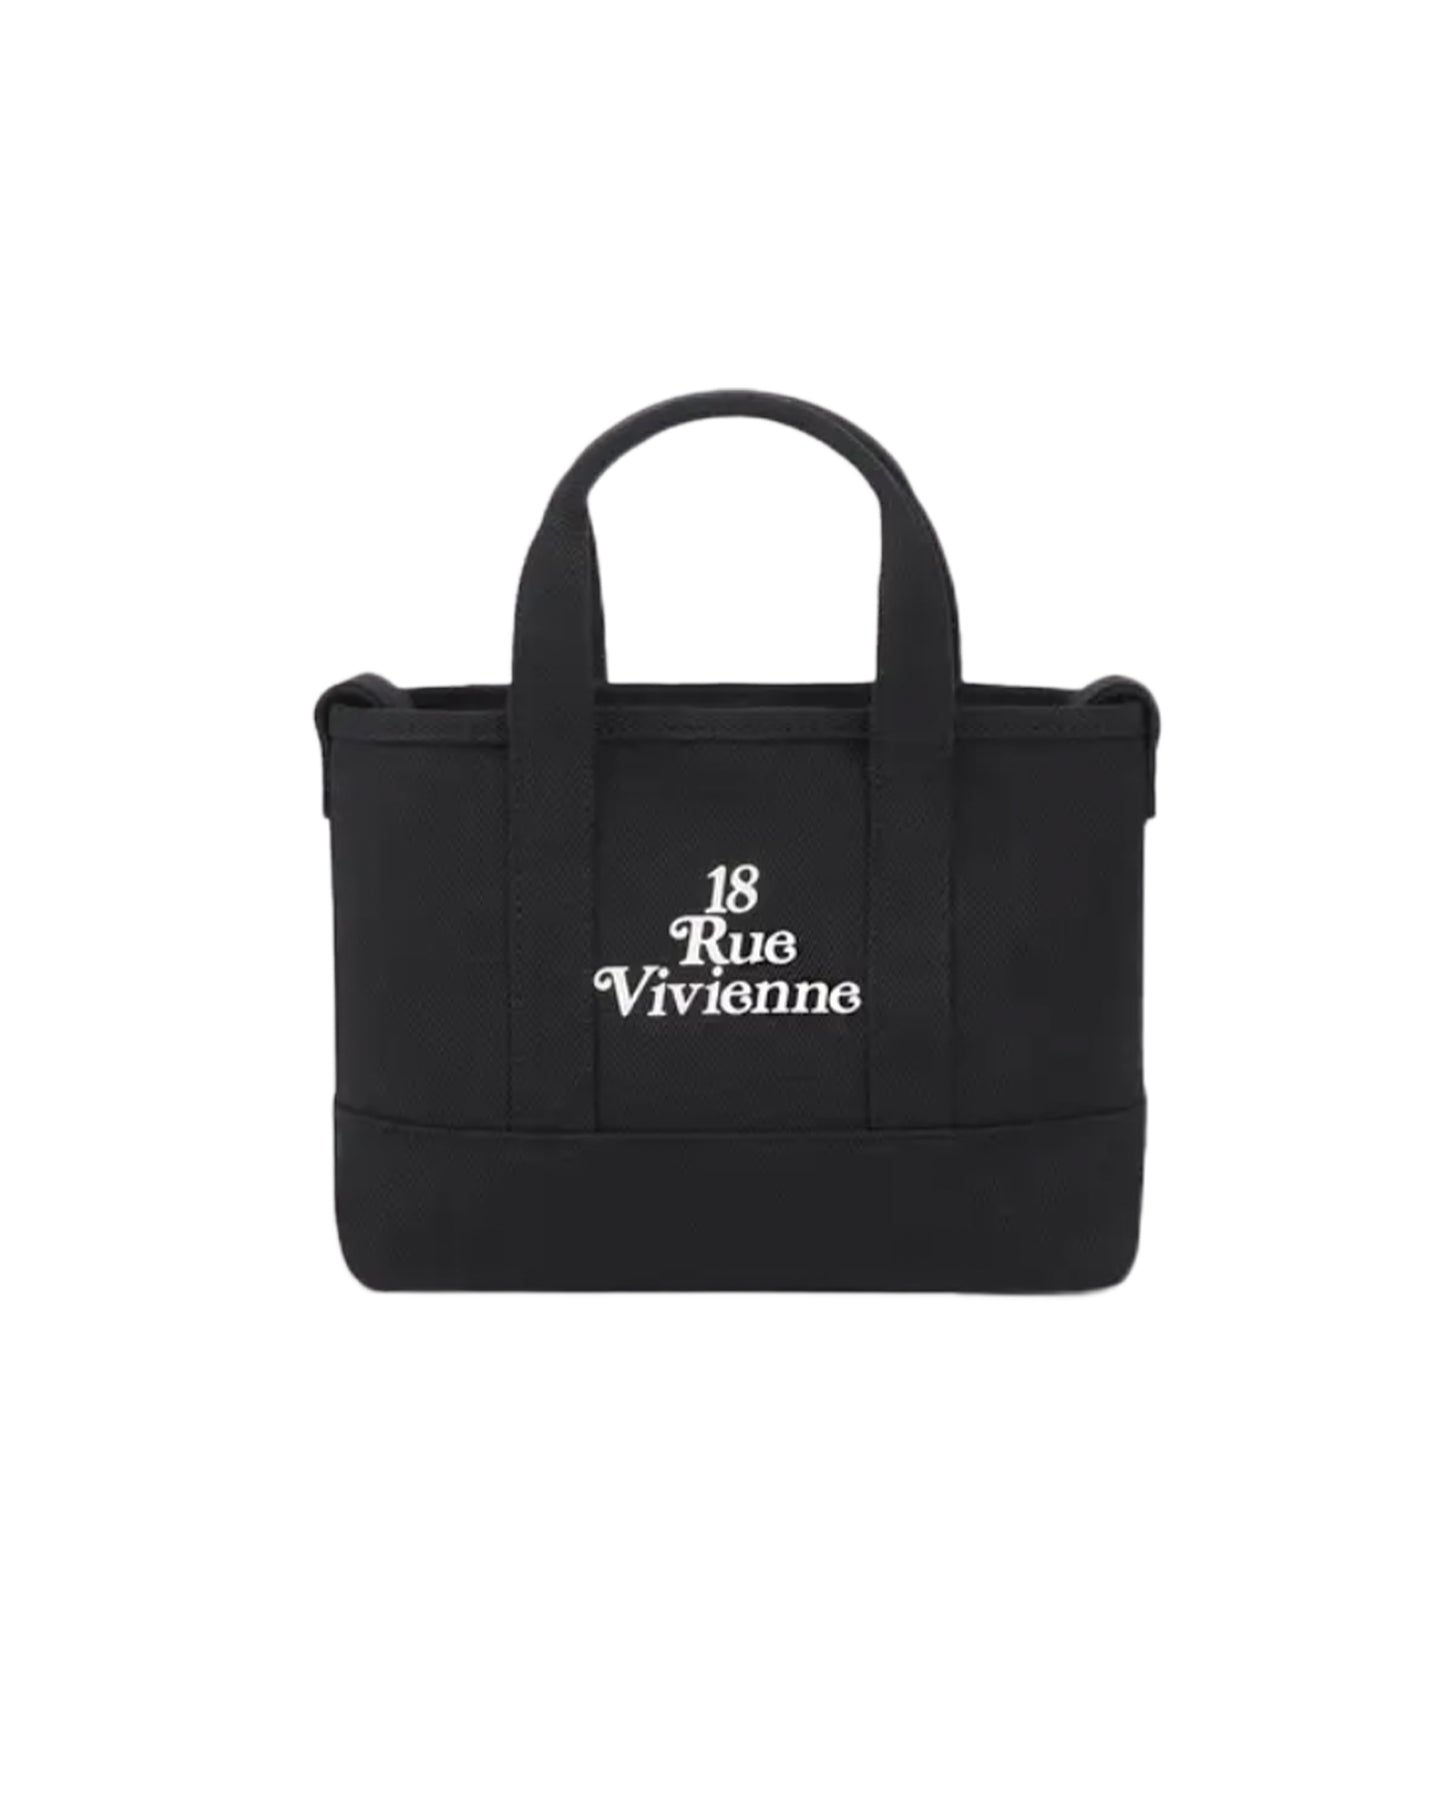 SHOPPER/TOTE BAG (Tote bag) Black